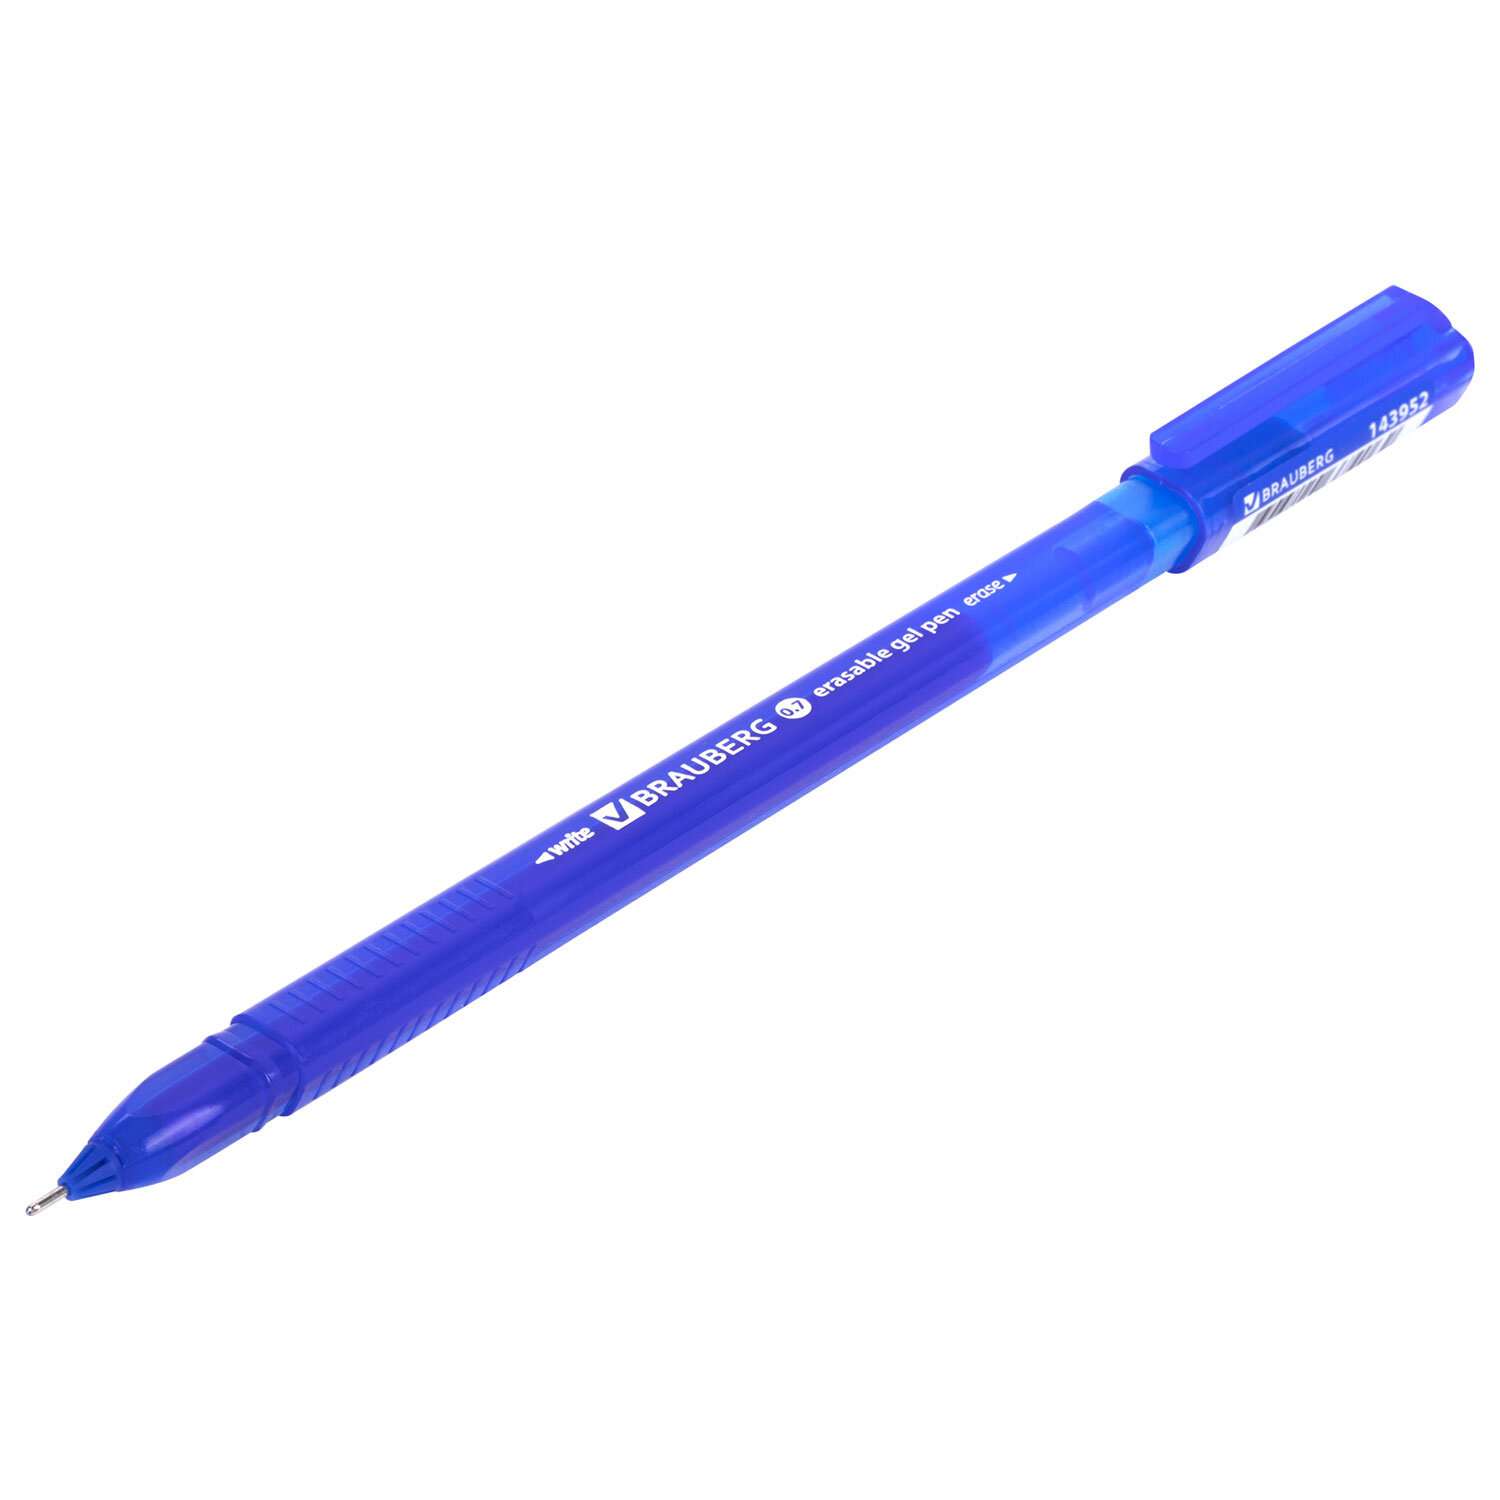 Ручки гелевые Brauberg пиши стирай набор 4 штуки синие - фото 9